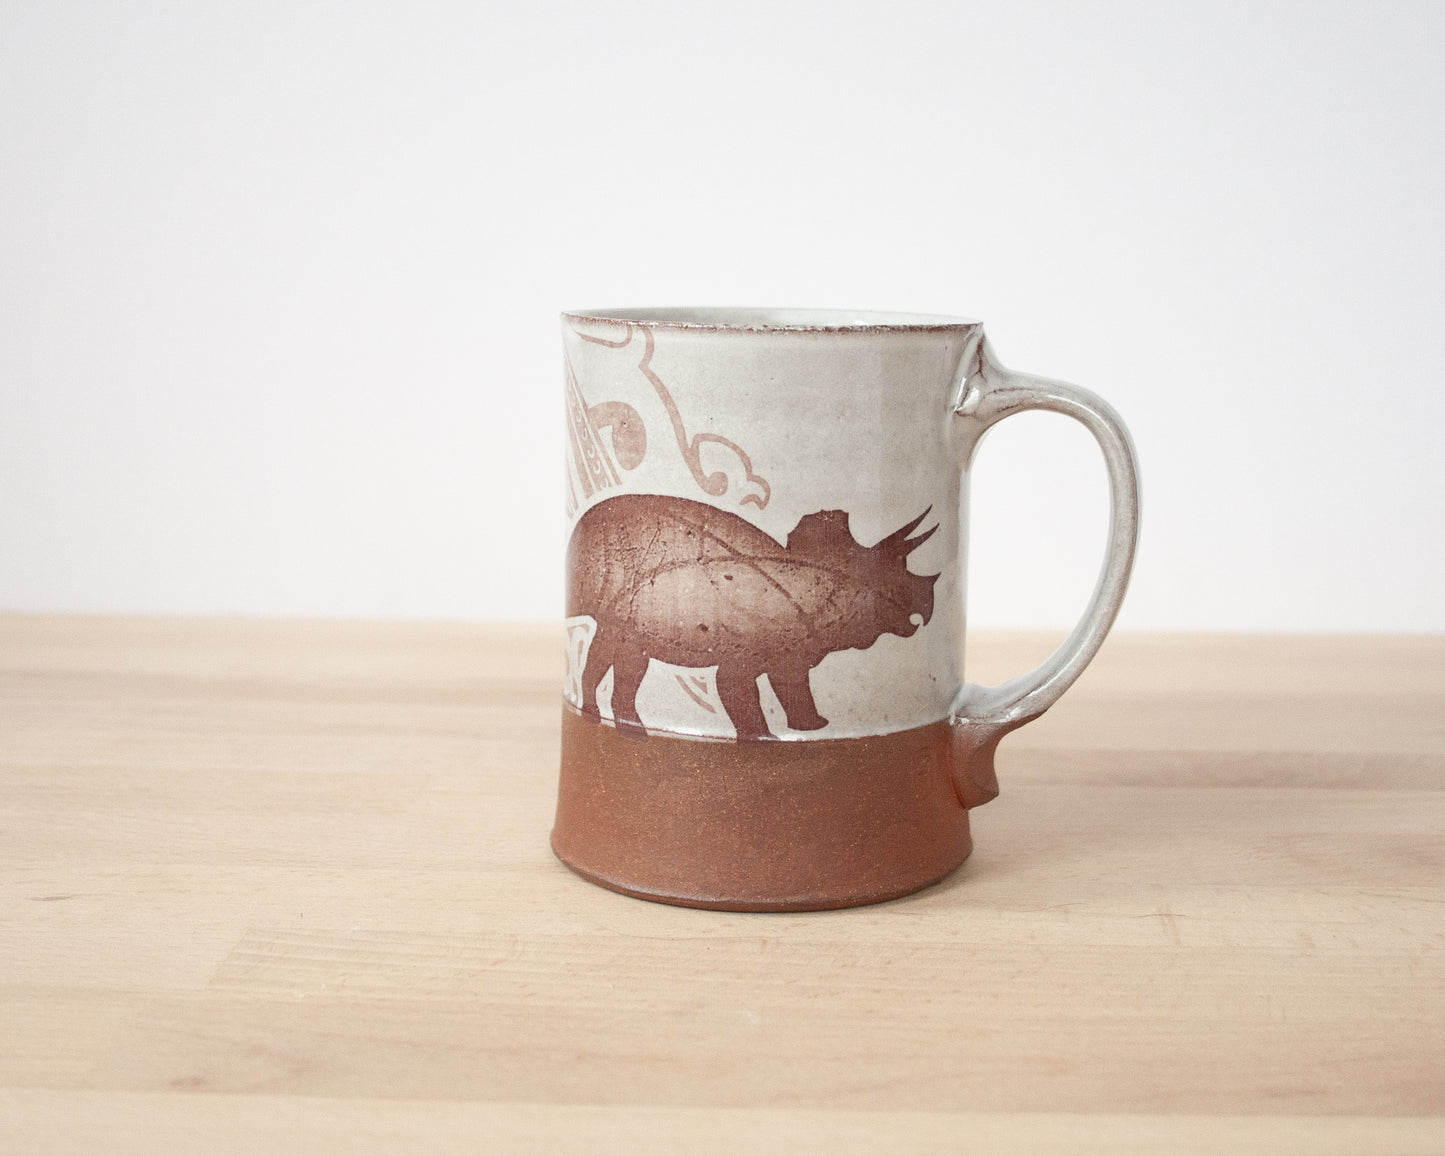 Triceratops Mug with pattern - white